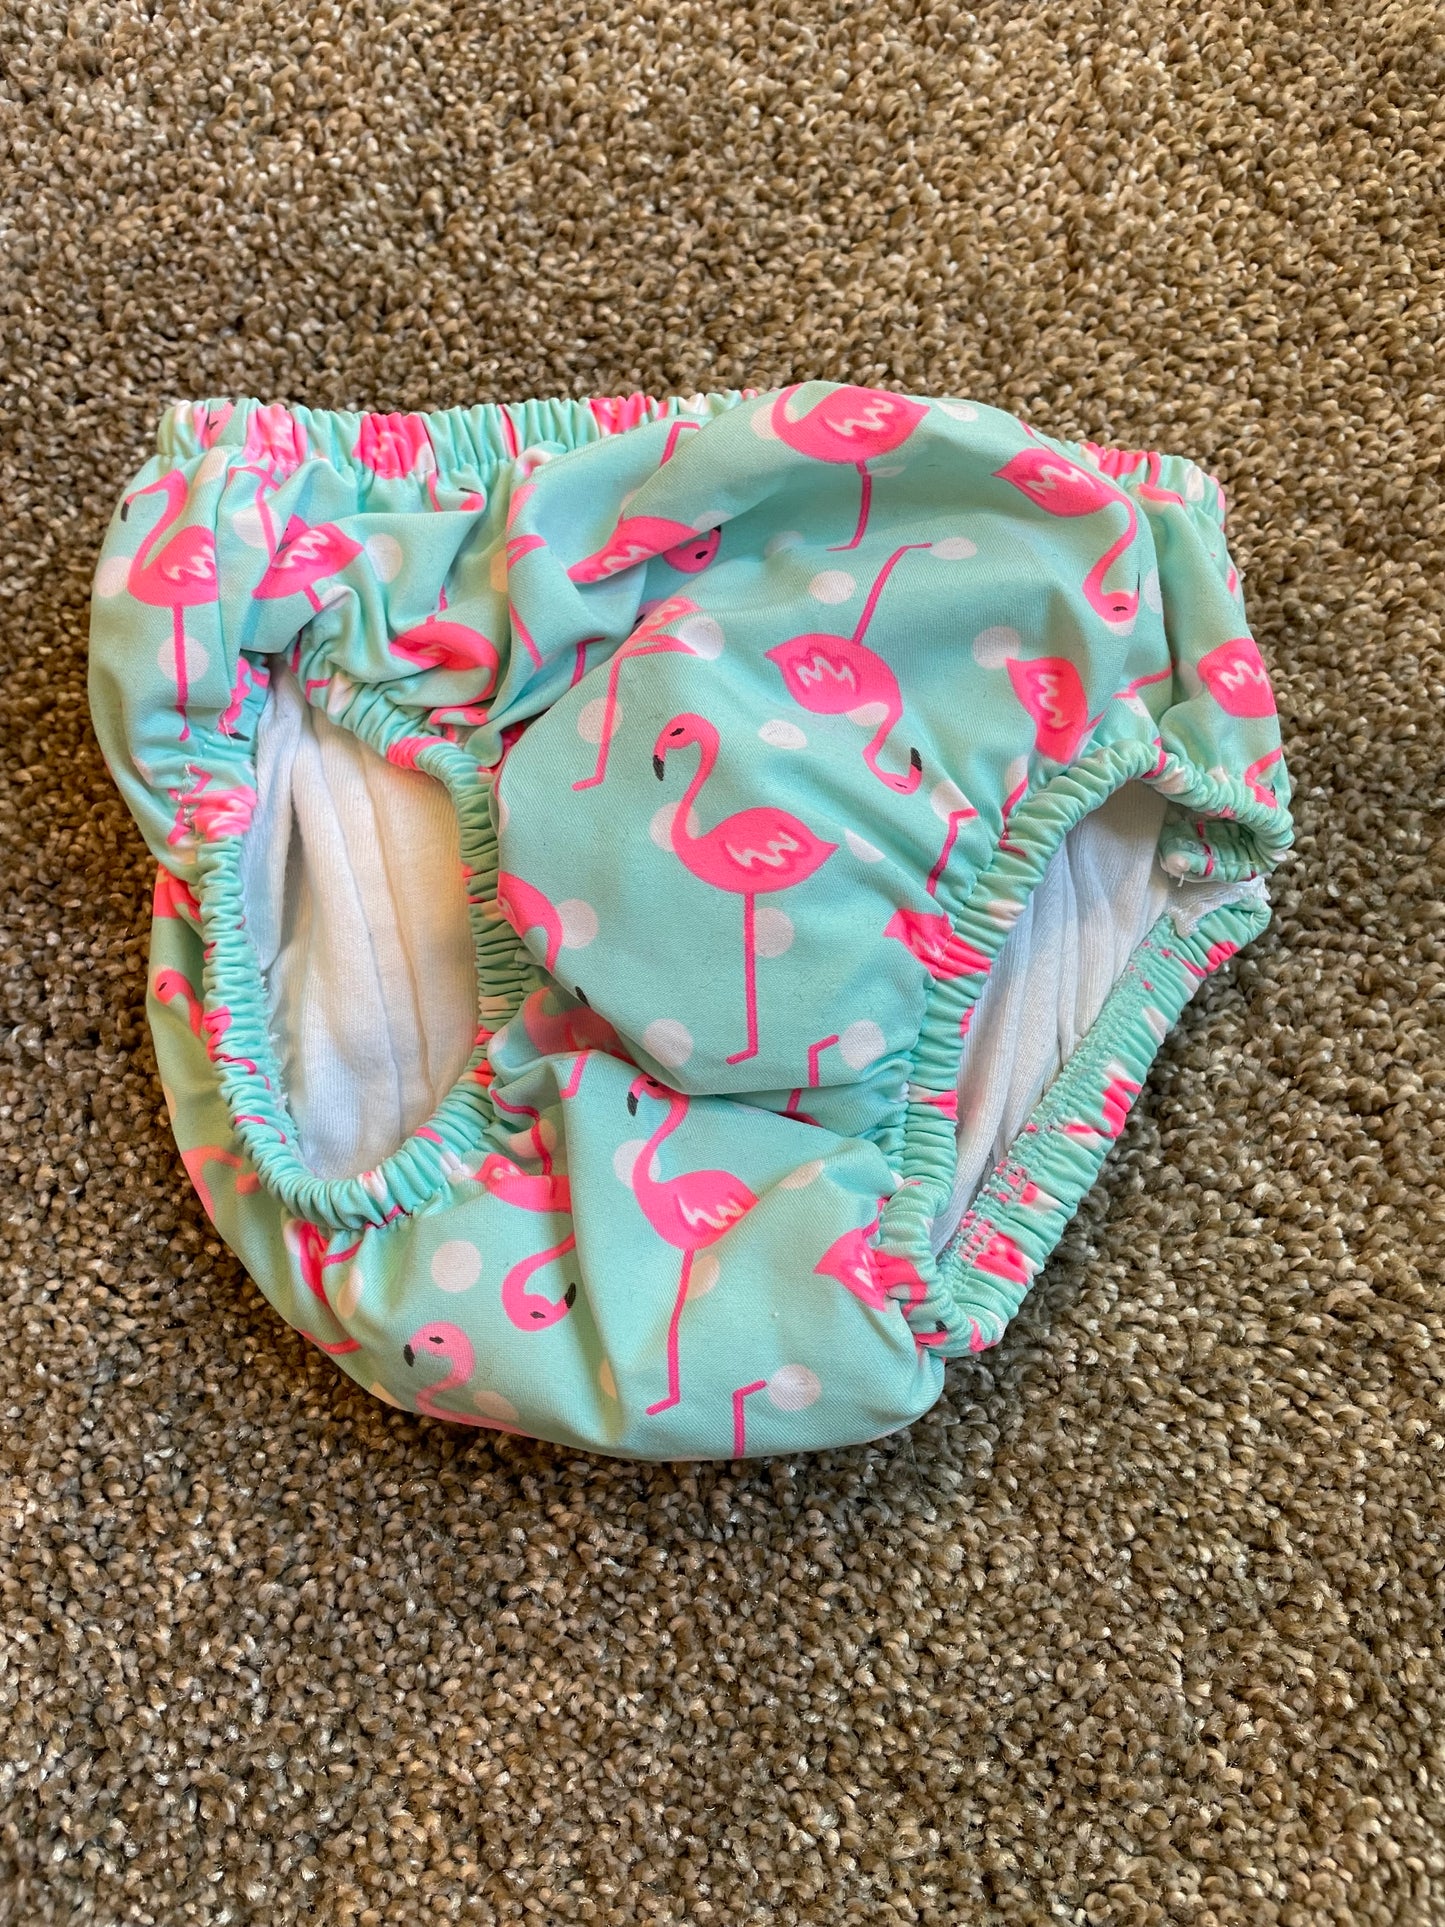 Girls 6-12 month reusable swim diaper